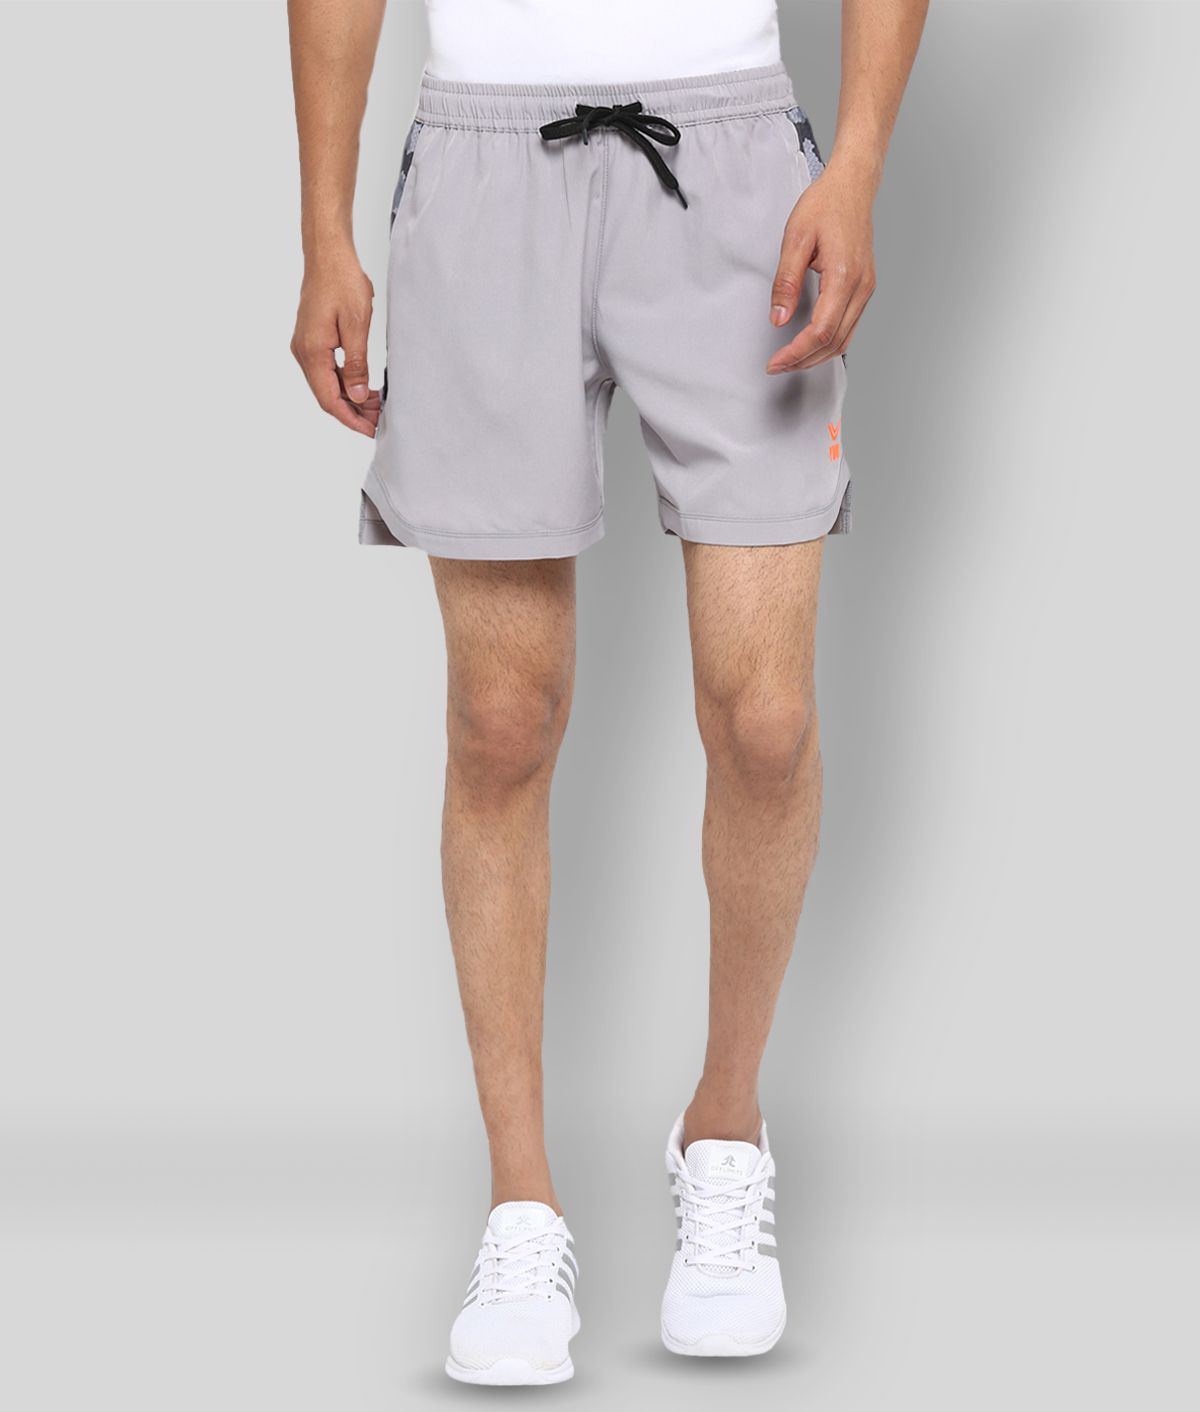     			YUUKI Grey Polyester Cotton Running Shorts